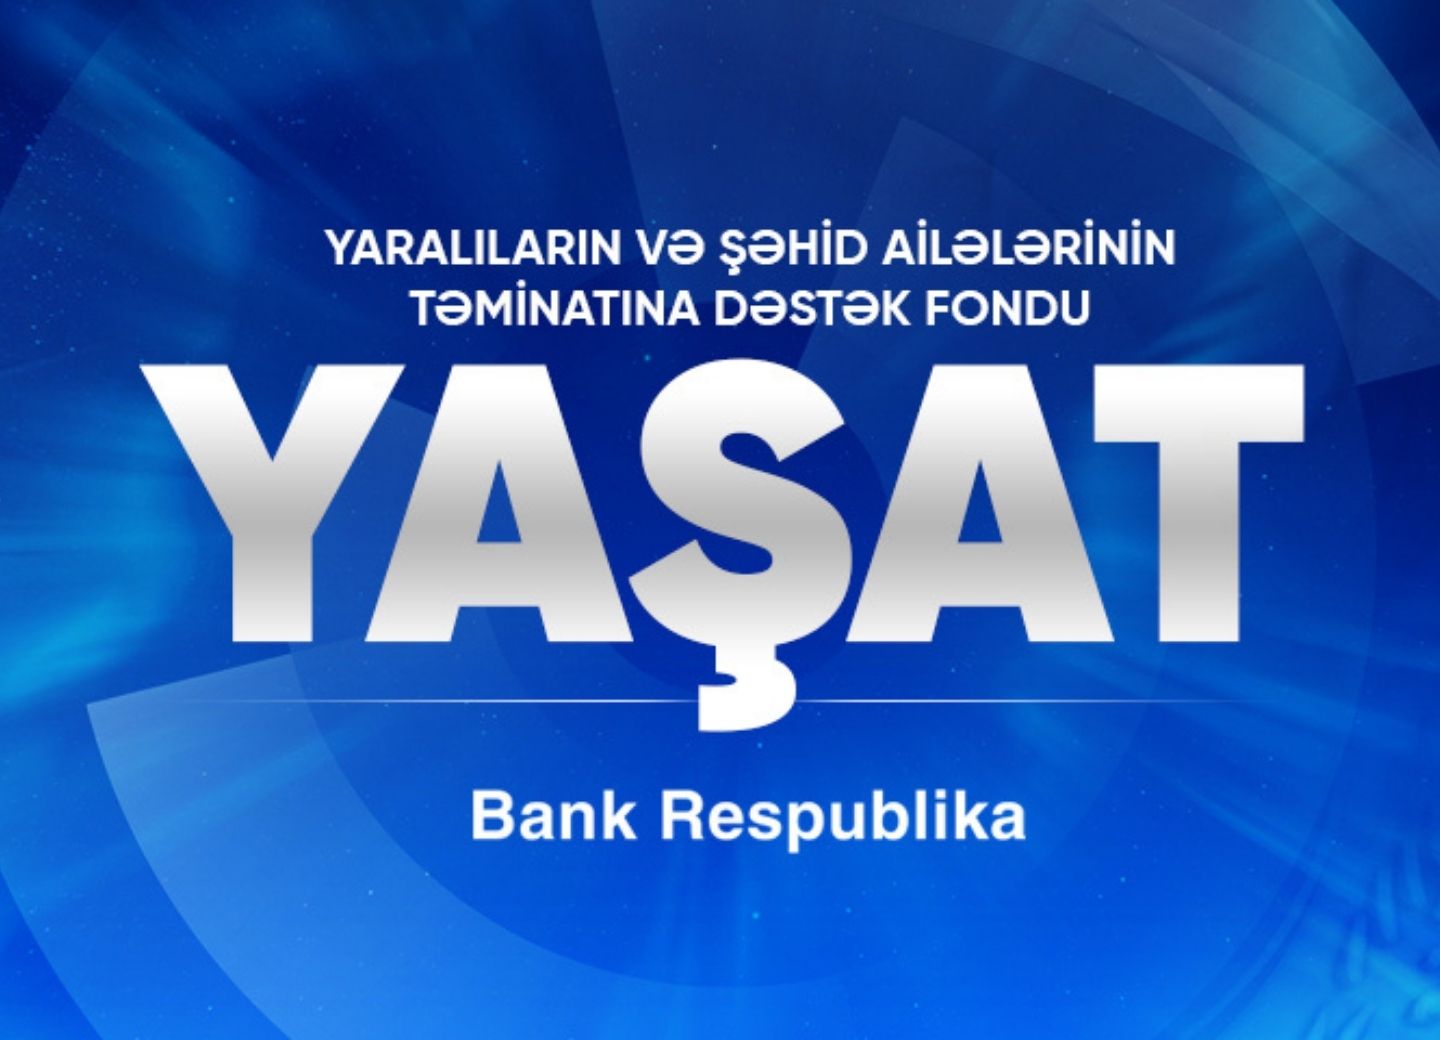 Bank az. Bank Respublika. Фонда "Yaşat" логотип. Bank Respublika logo. Bank Respublika Baku logo.